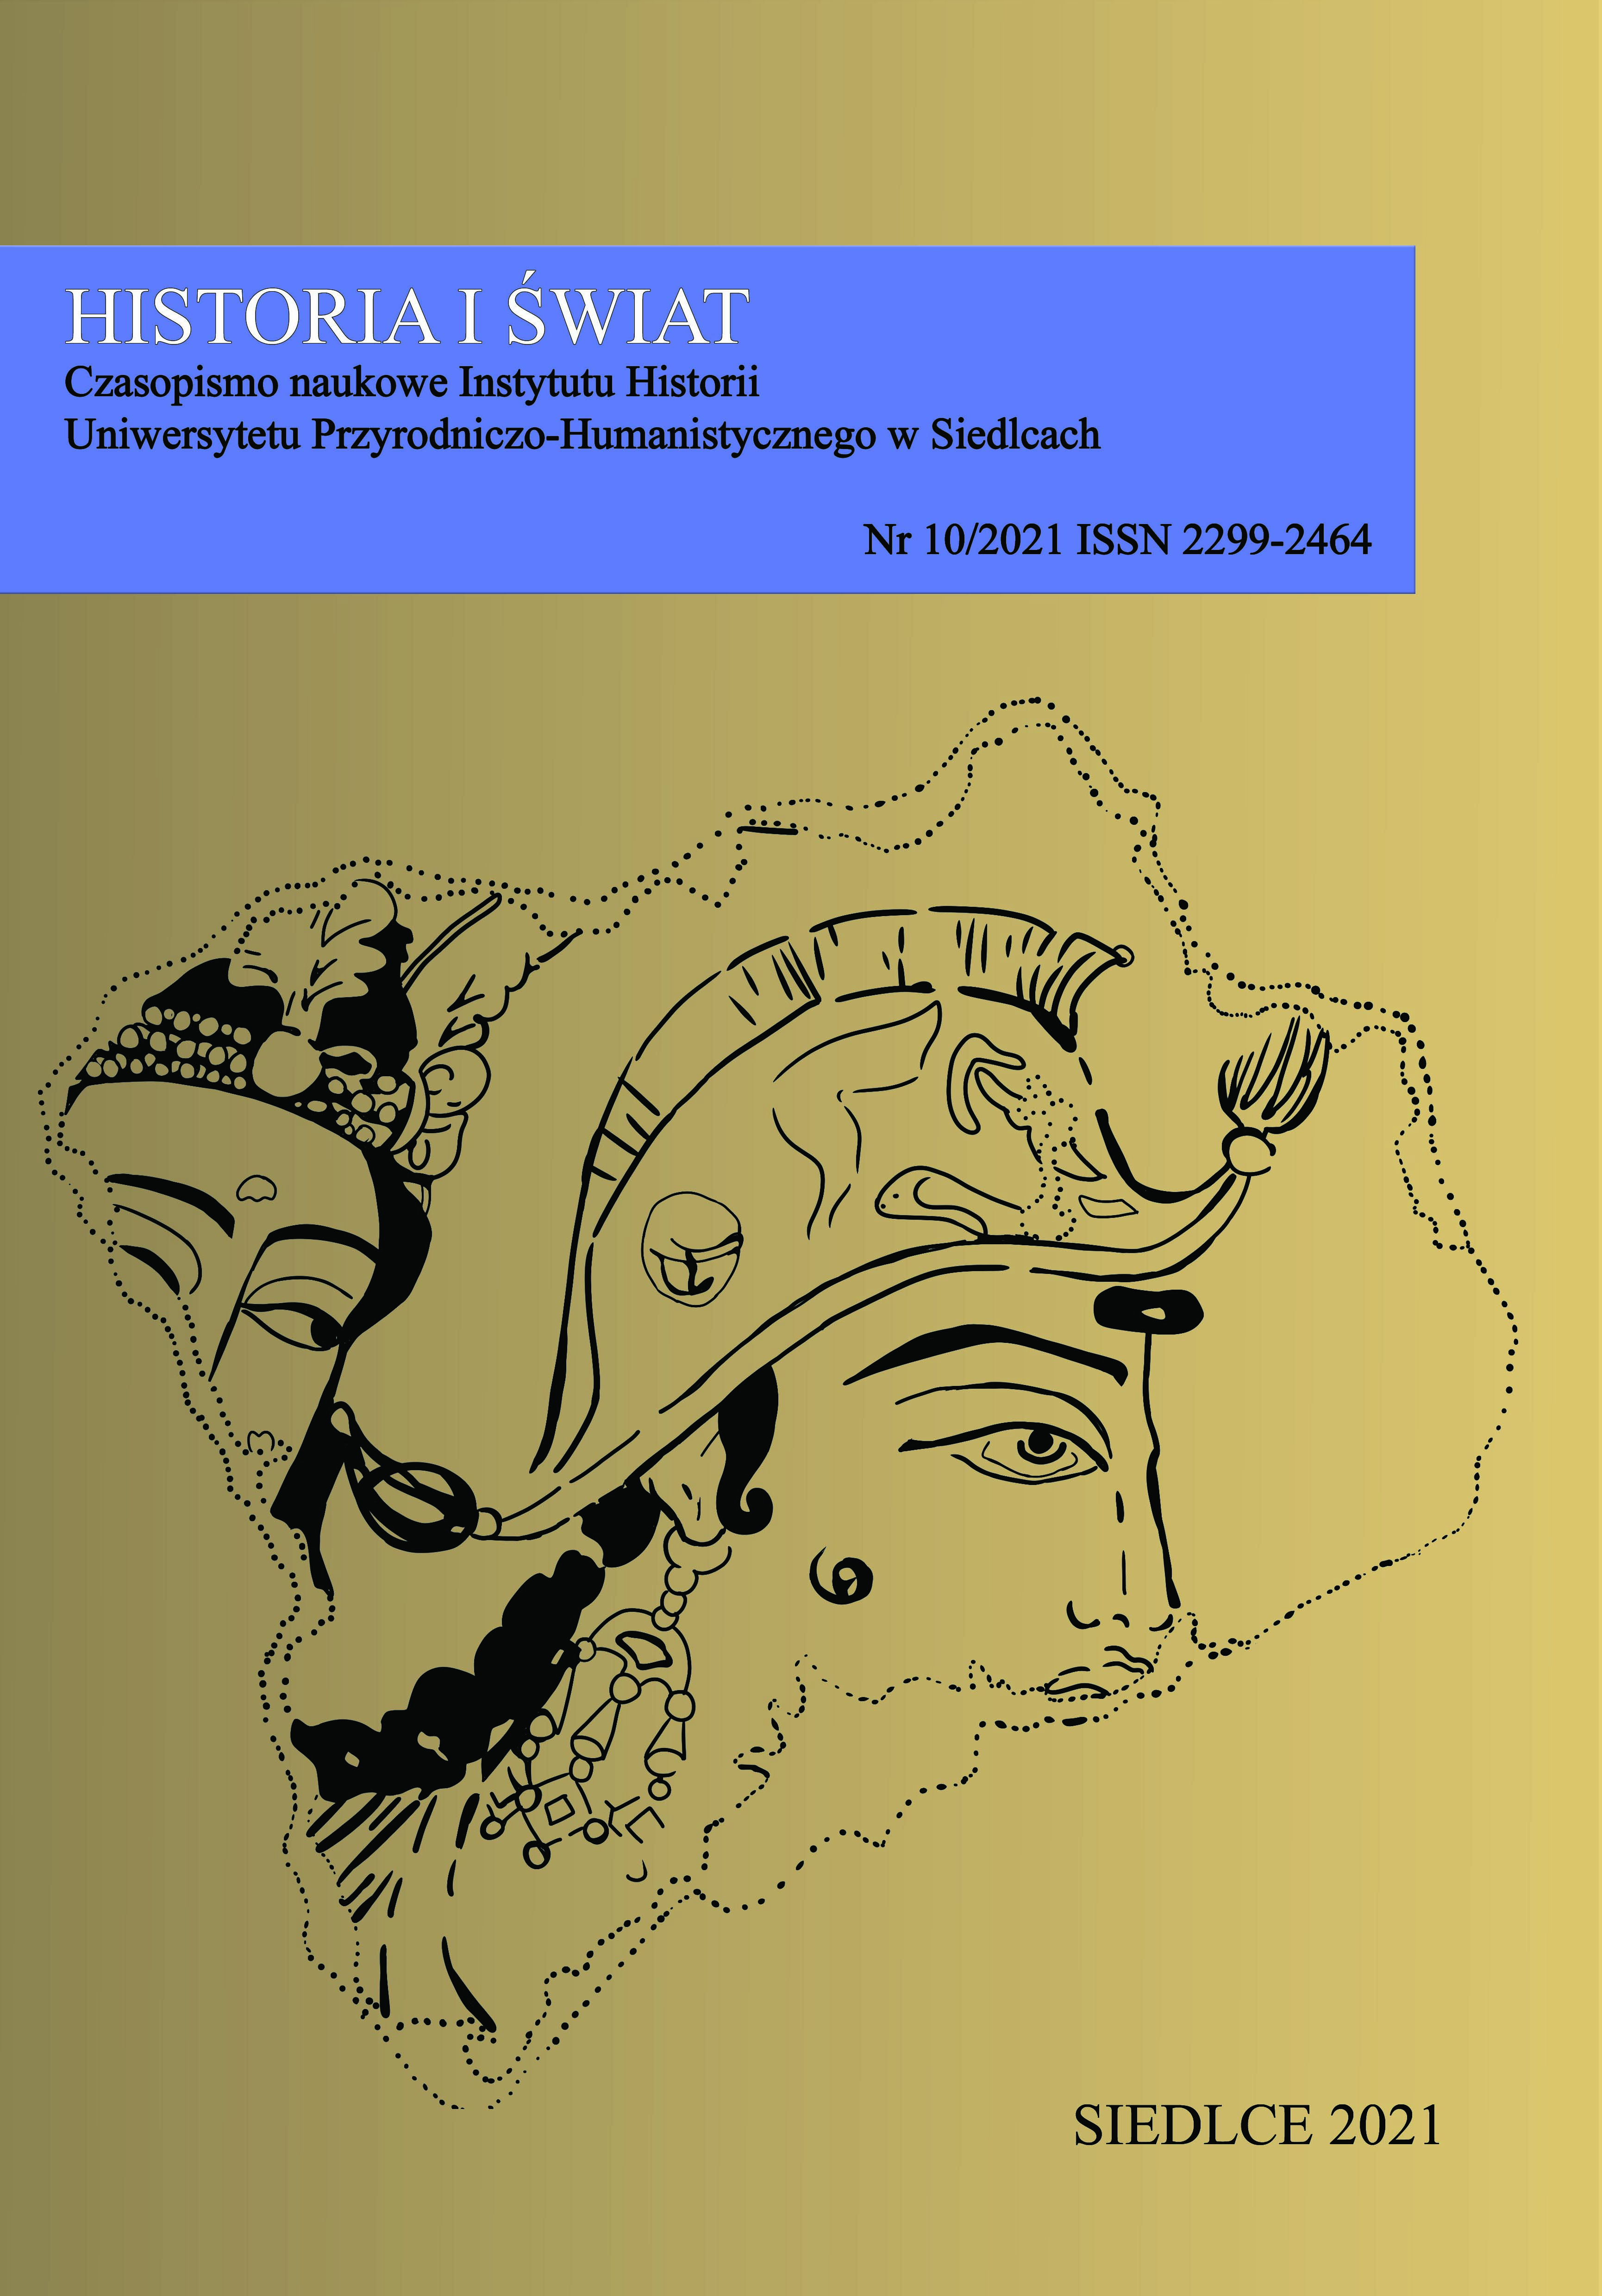 Manya Saadi-nejad, Anāhitā. A History and Reception of the Iranian Water Goddess, London: Bloomsbury Publishing Plc I.B. Tauris, 2021, ISBN: 978-1-8386-0111-9